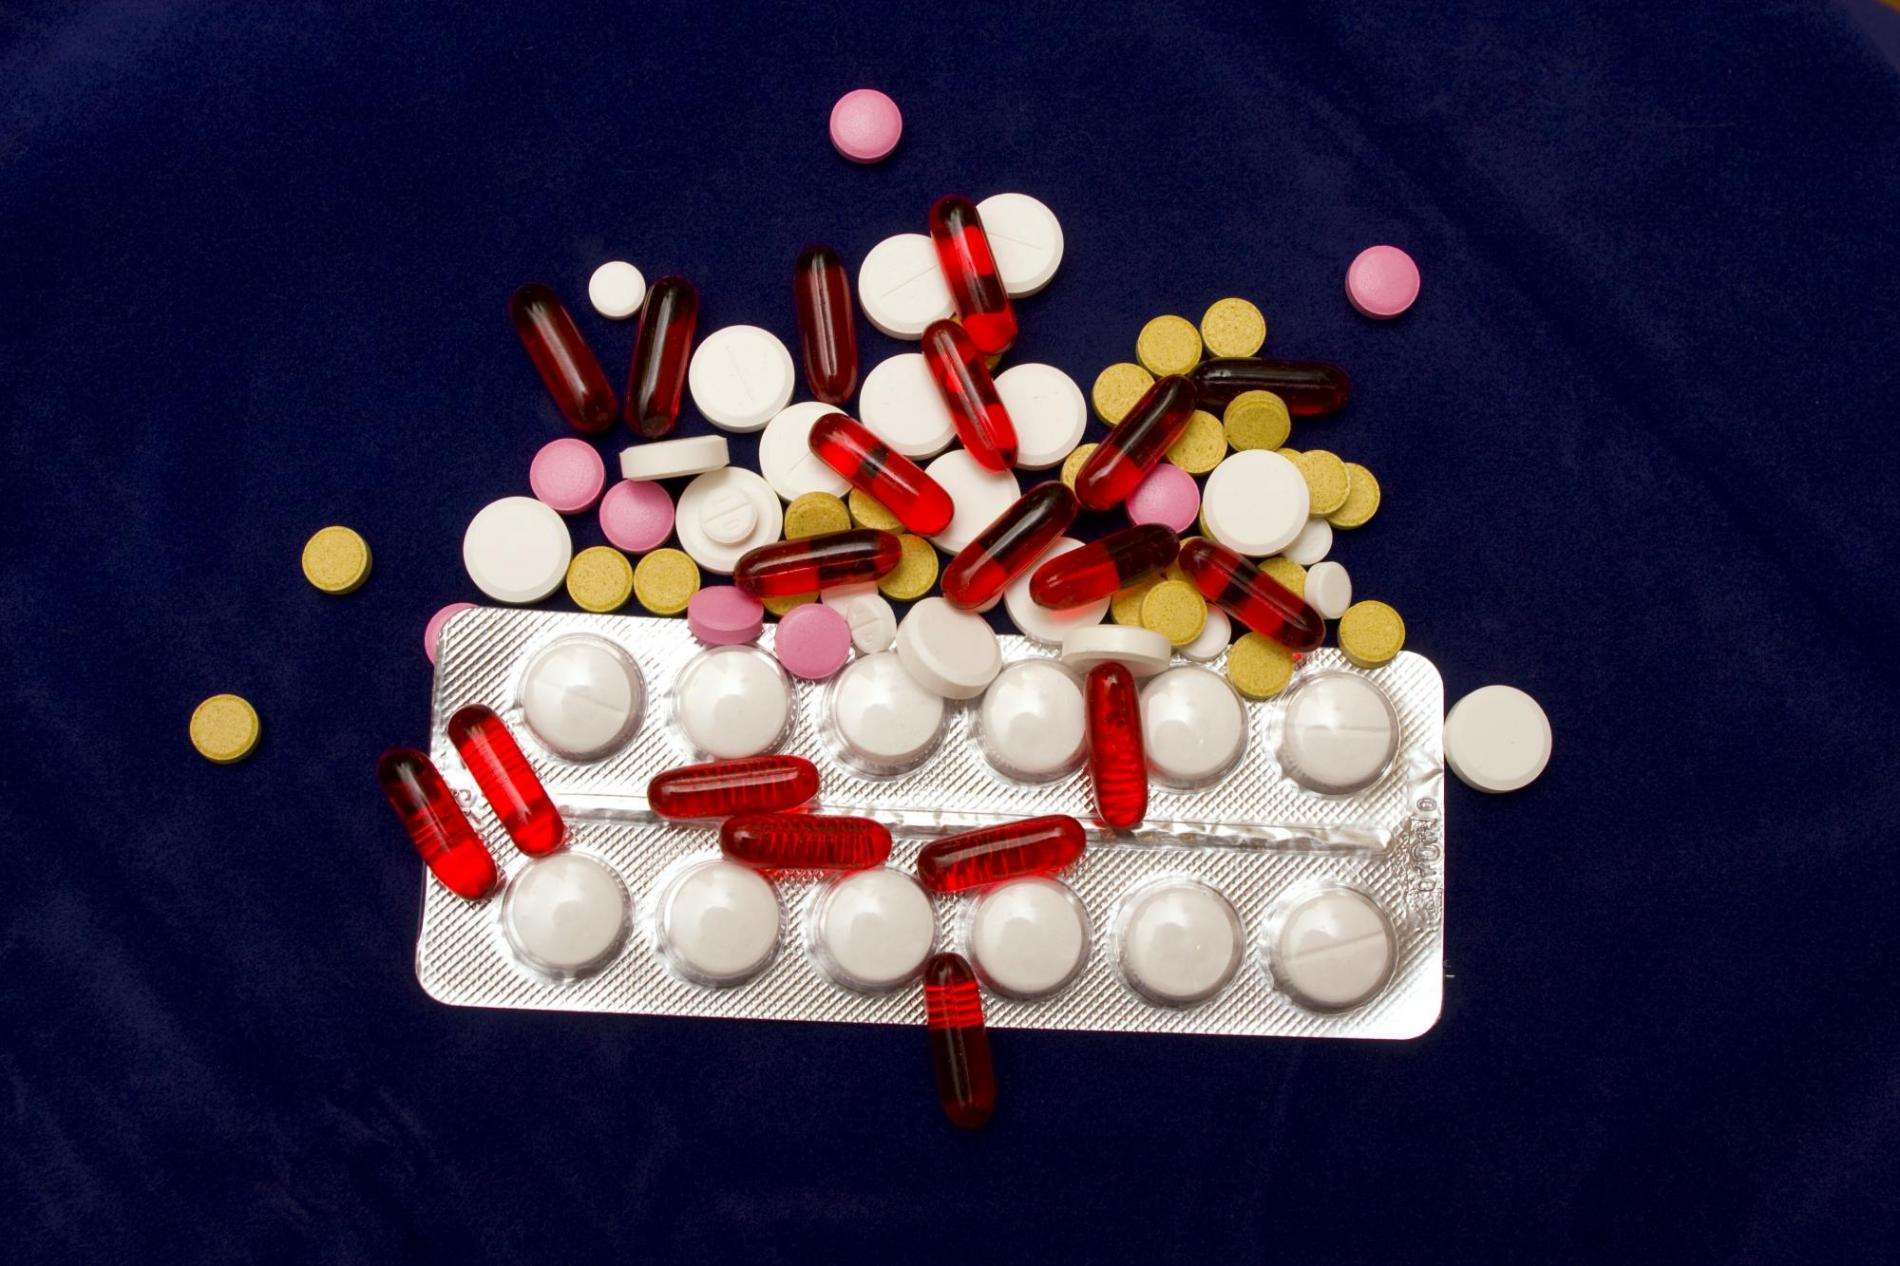 Антидепрессант «Золофт»: пропажа из аптек, продажа в даркнете и распространение в виде «закладок»